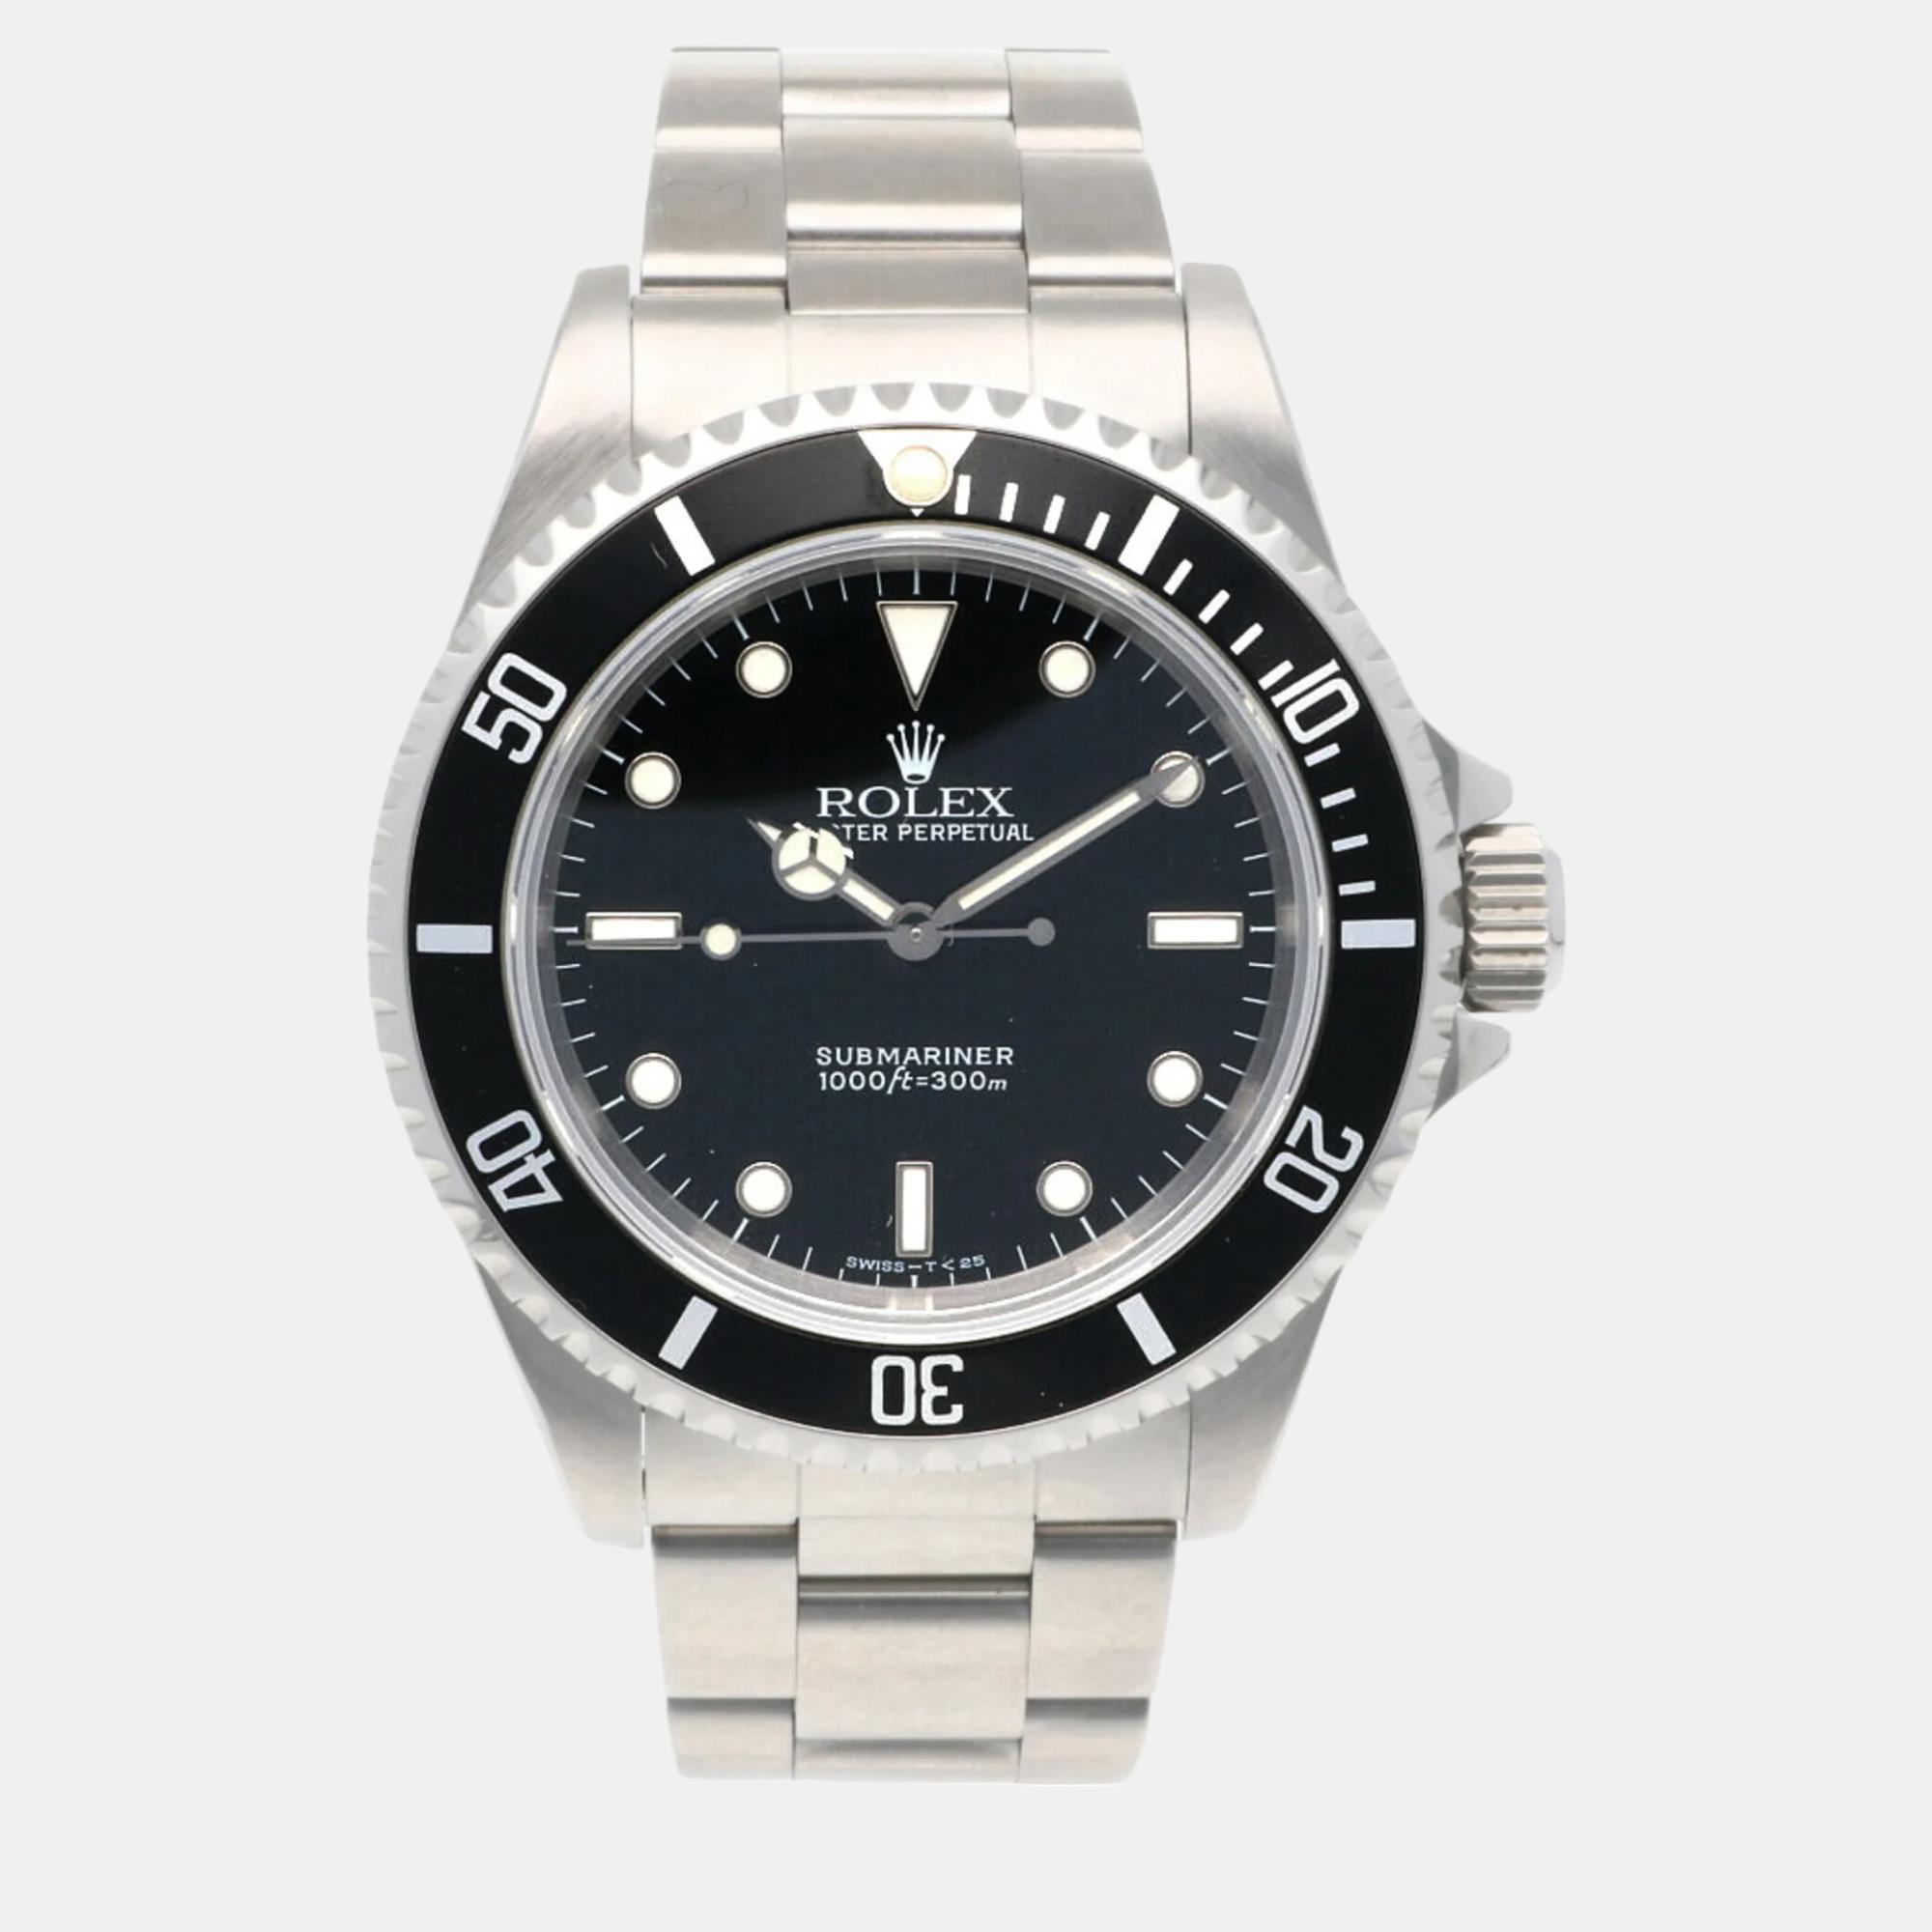 Rolex black stainless steel submariner 14060 automatic men's wristwatch 40 mm